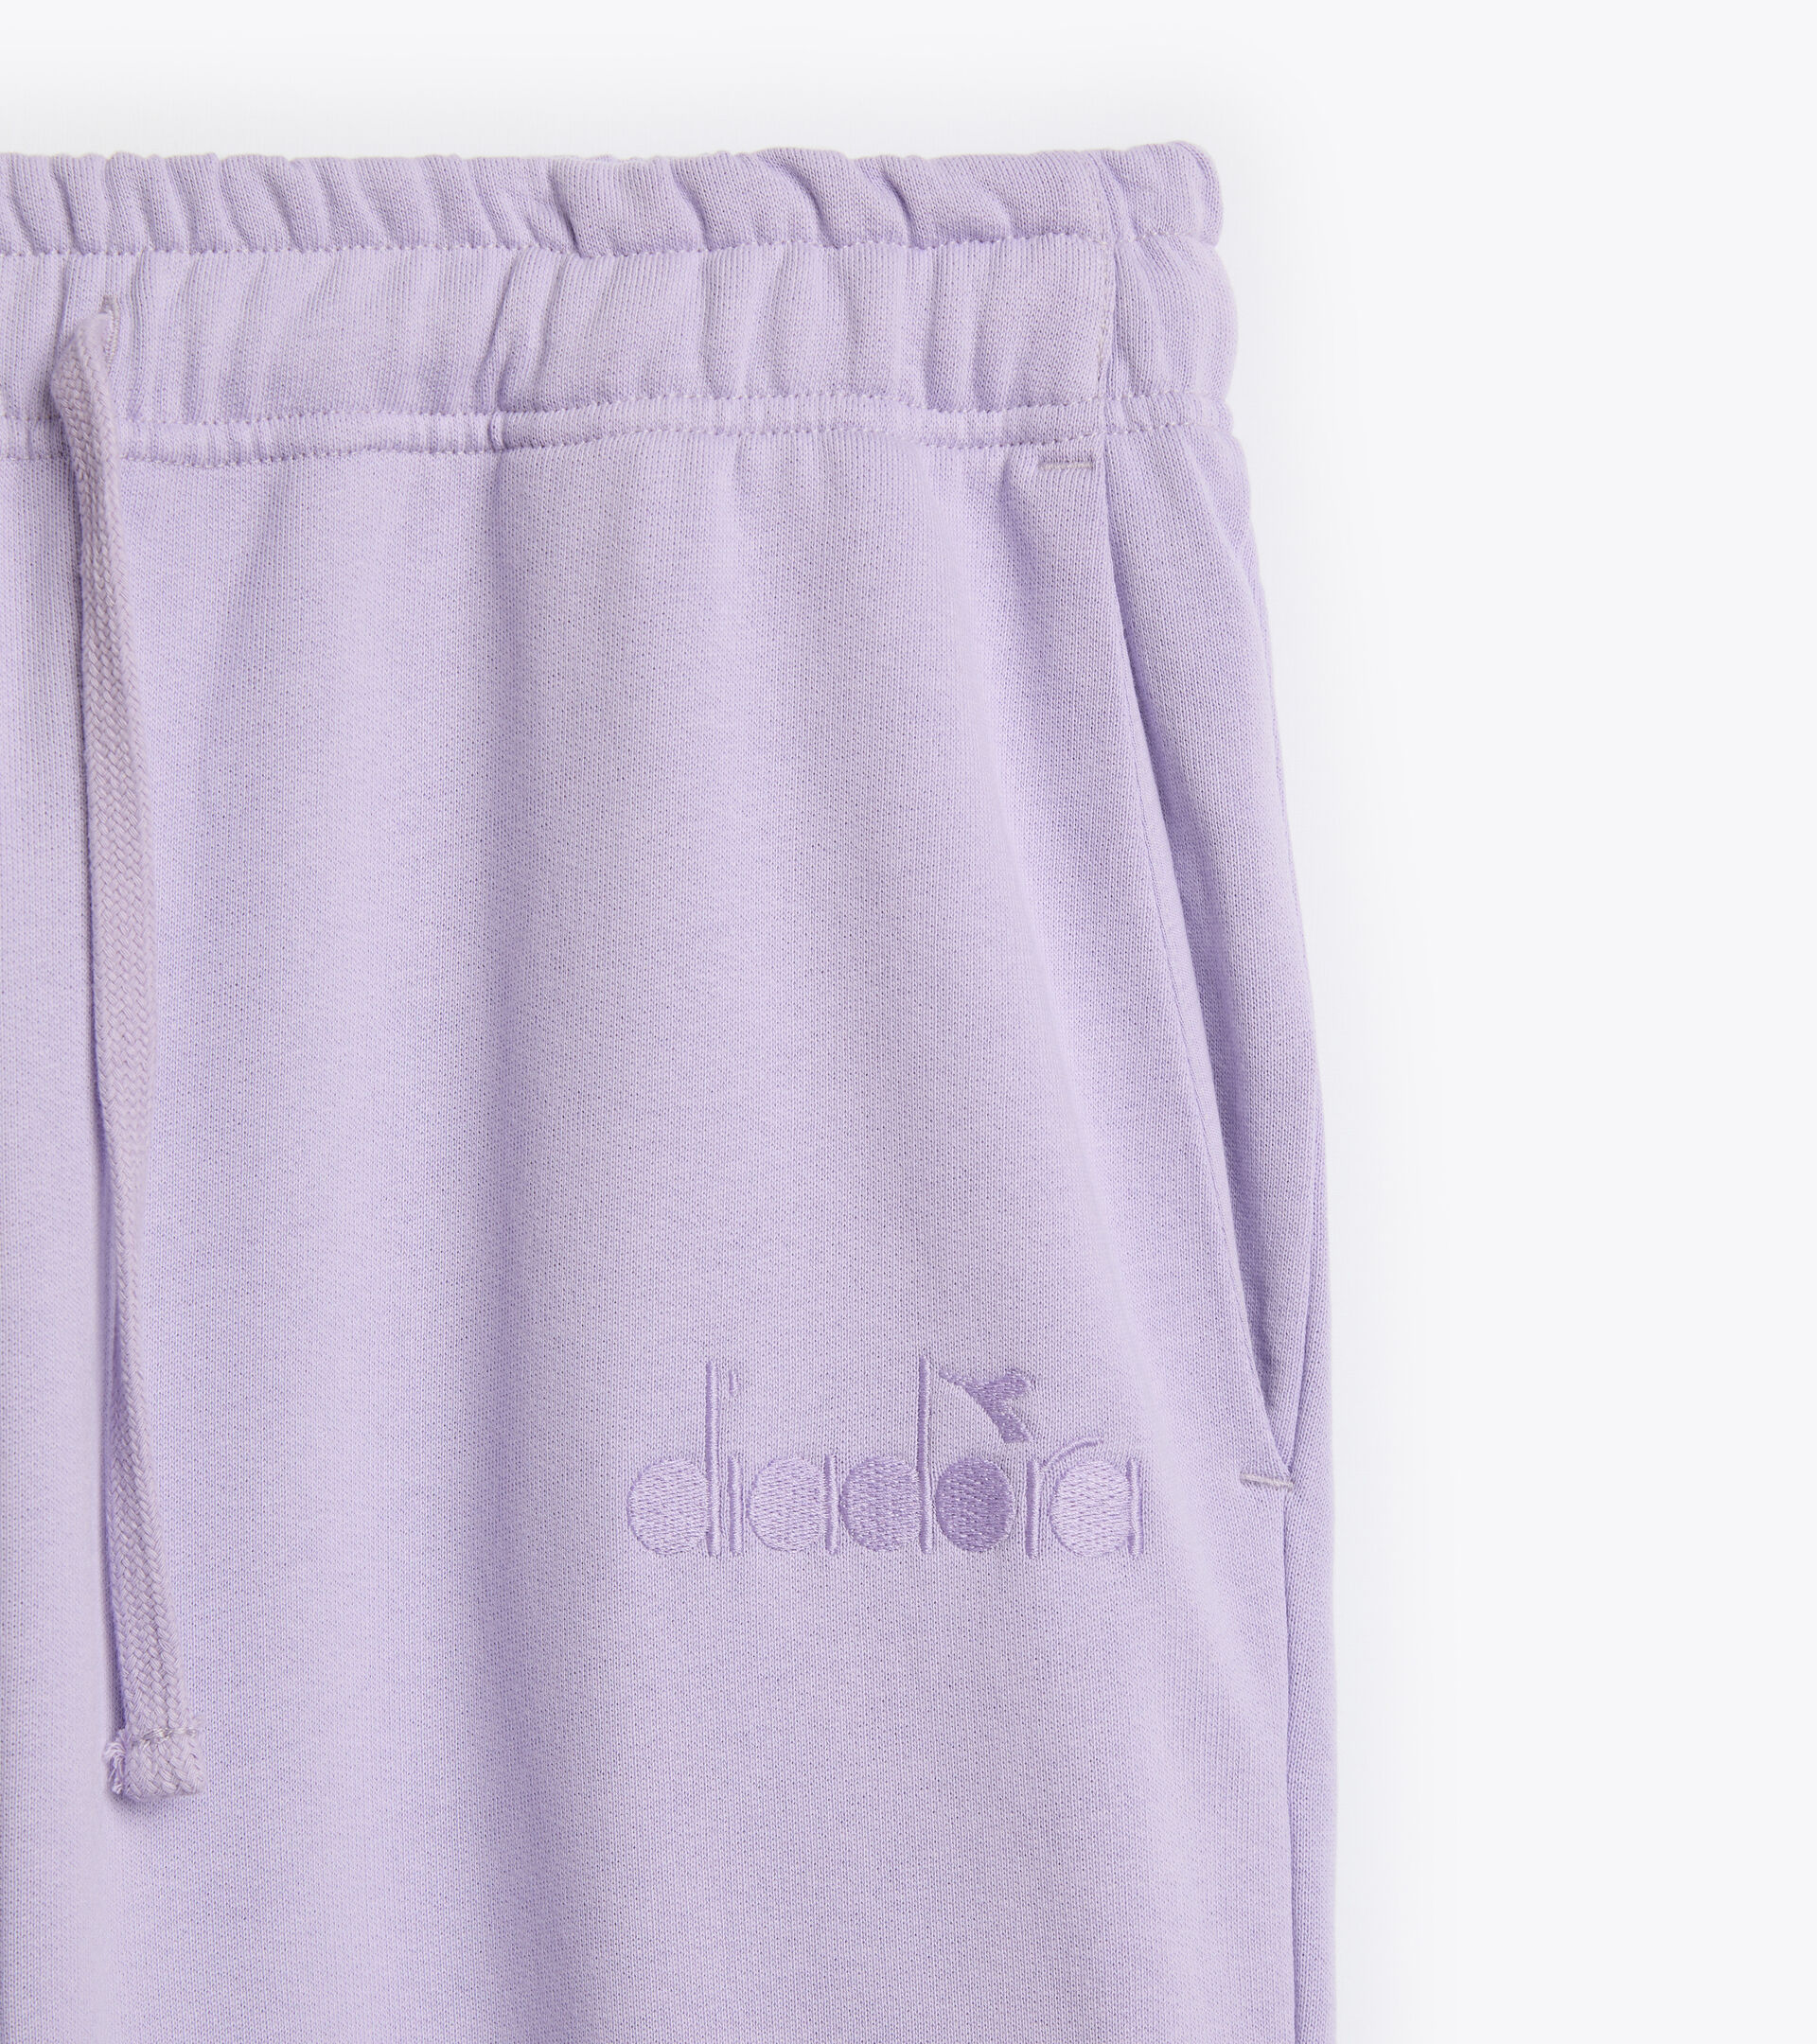 Cotton sweatpants - Gender neutral PANT SPW LOGO PURPLE ROSE - Diadora